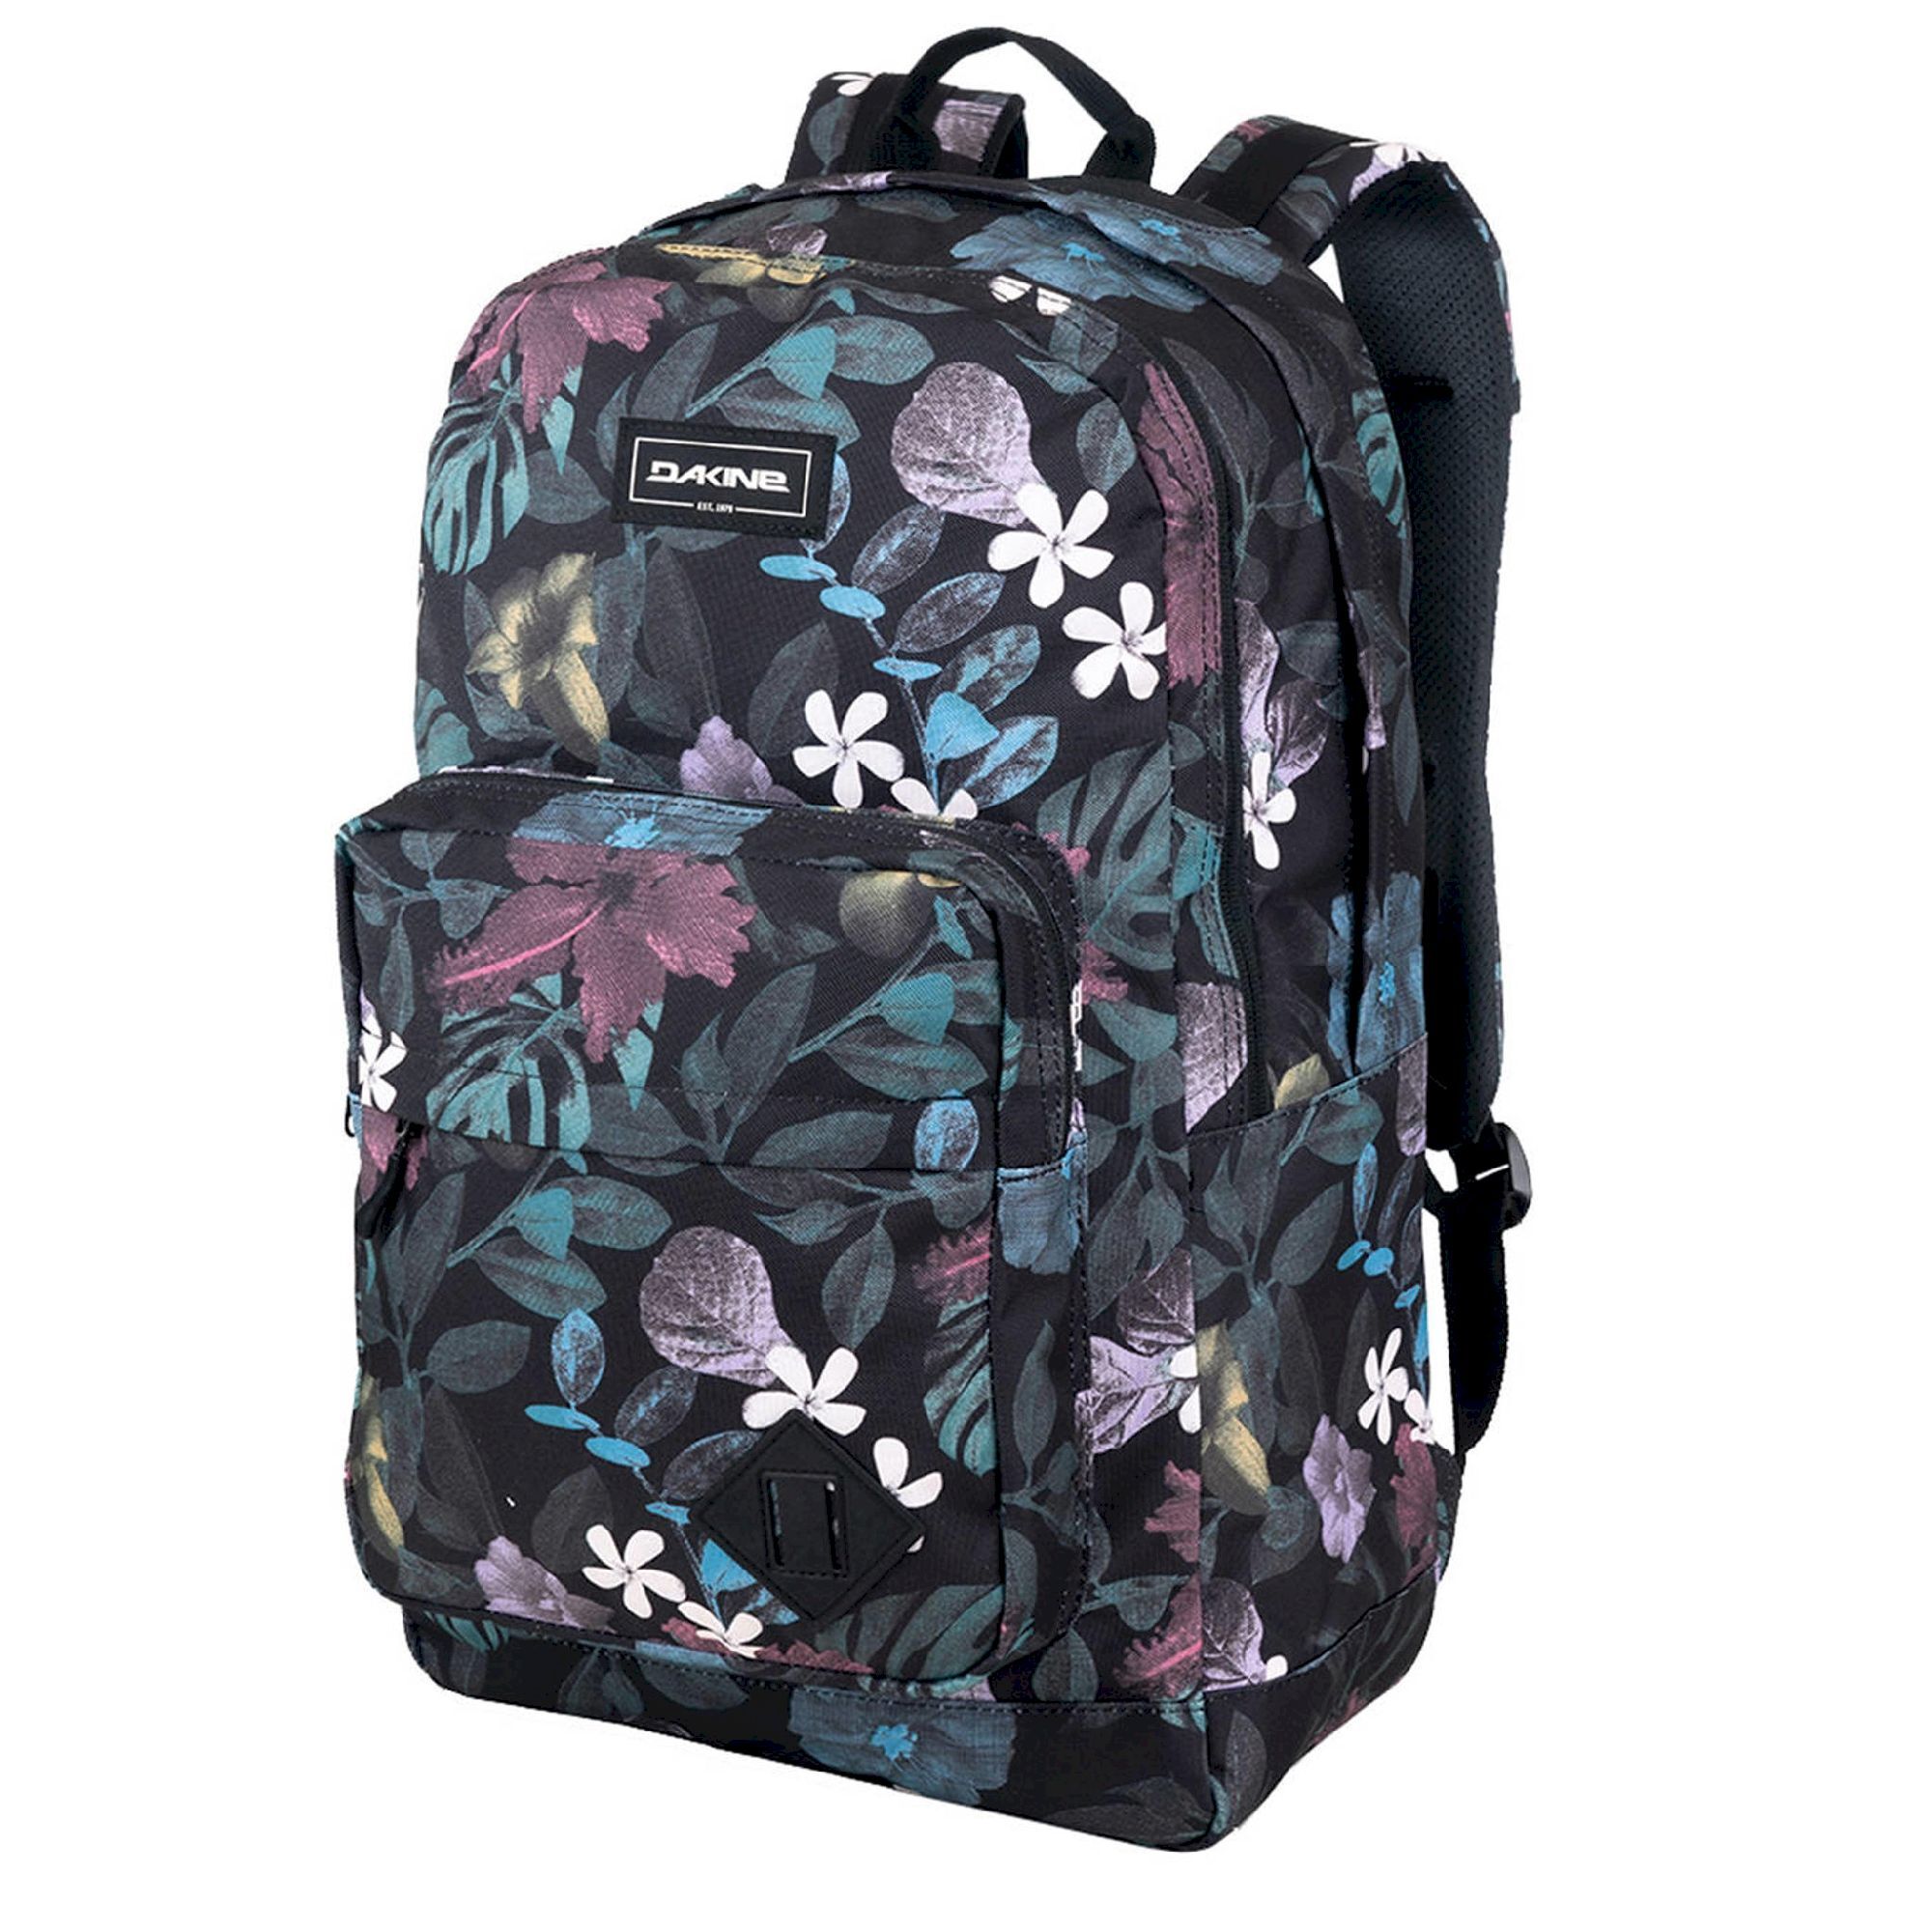 Dakine 365 Pack DLX 27L - Backpack